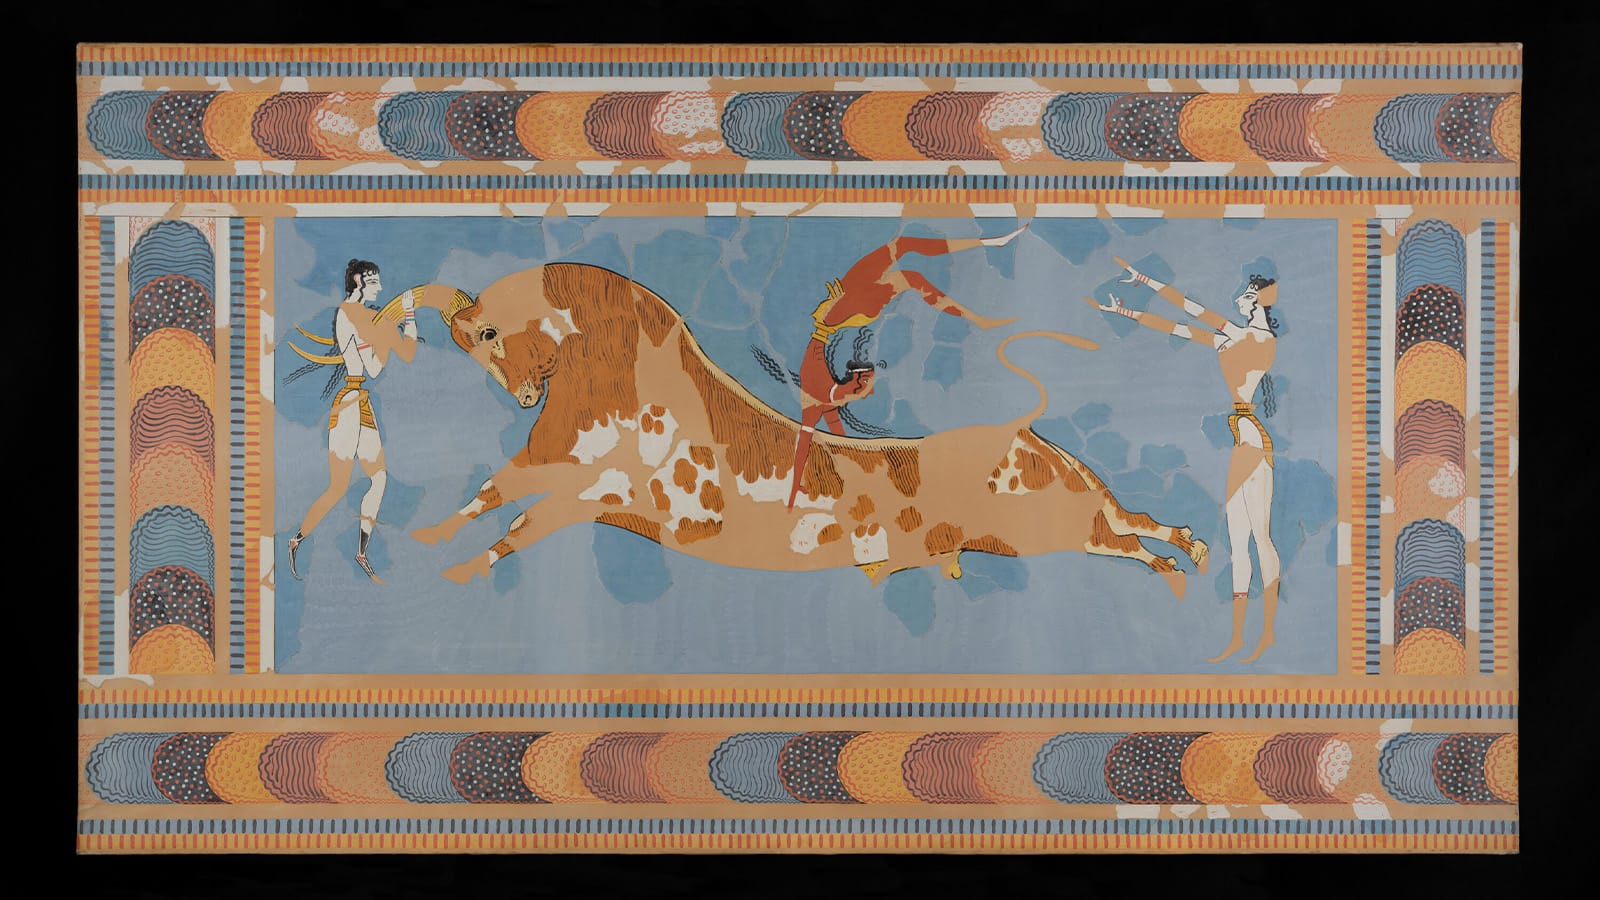 A mosaic depicting a mythical Greek scene